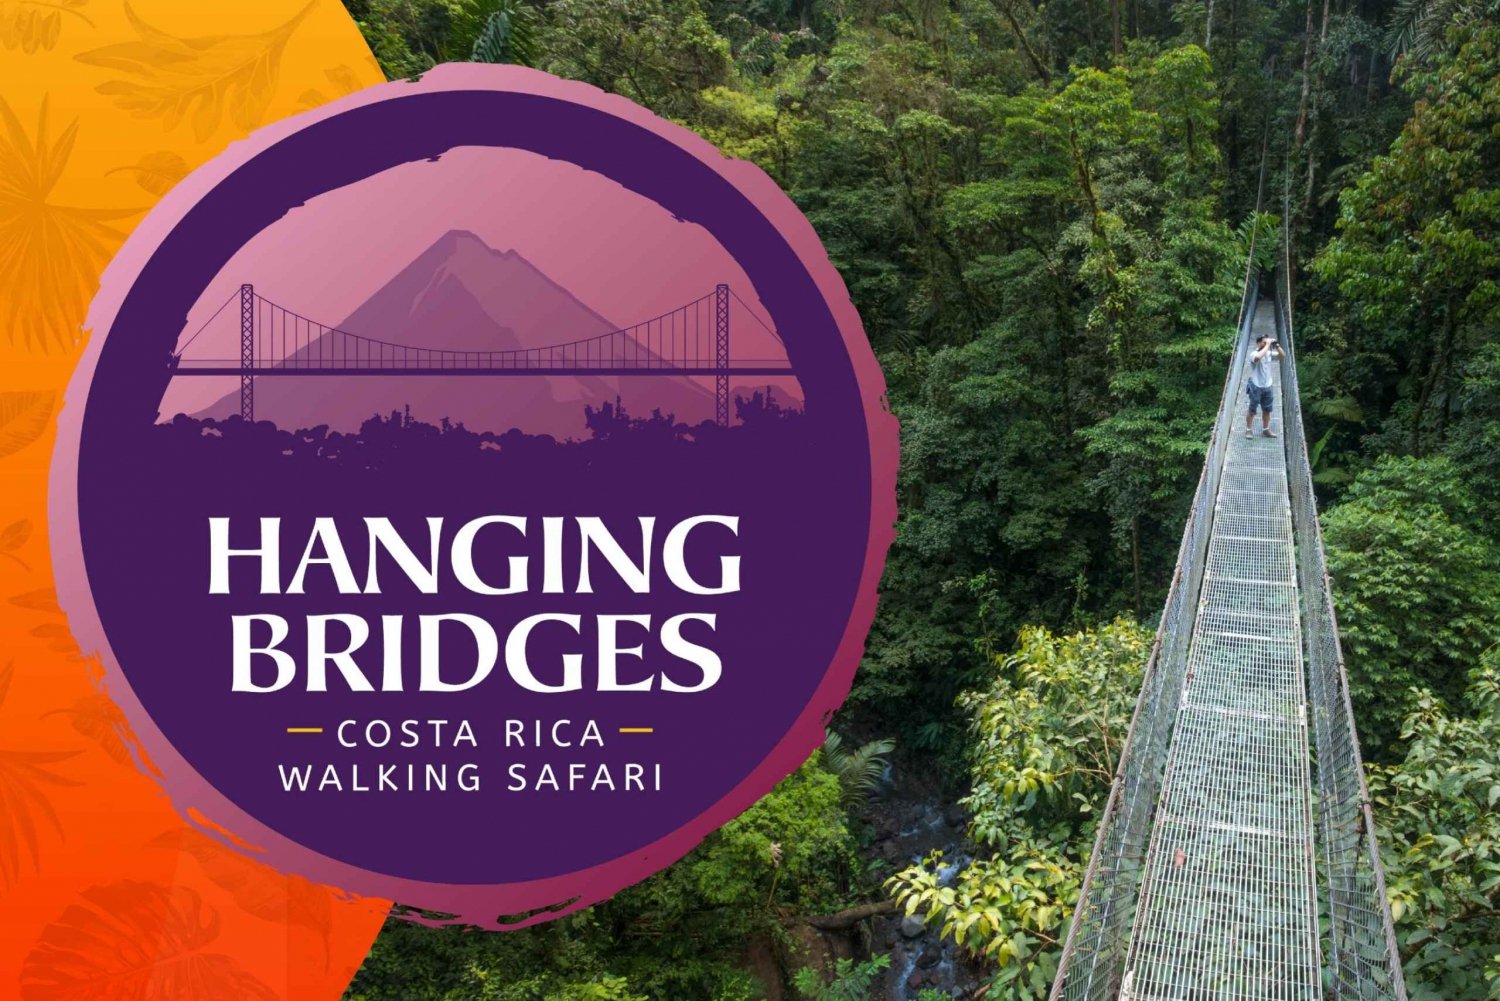 Parque Nacional Arenal: tour de puentes colgantes